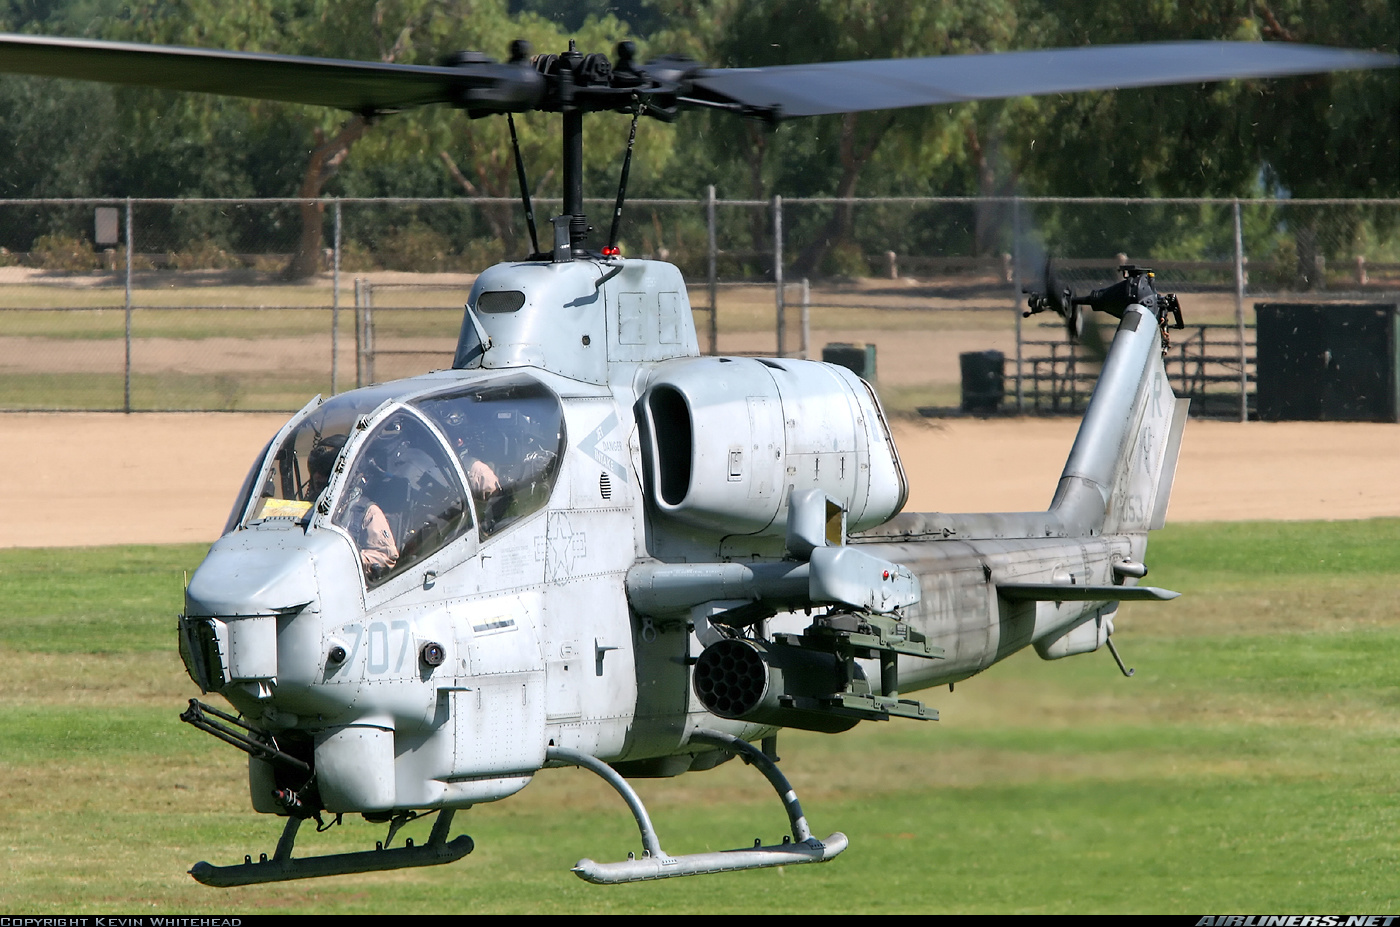 Супер кобра. Вертолет Ah-1w "супер Кобра". Bell Ah-1 Cobra. Вертолет Bell Ah-1 Cobra. Ah-1 super Cobra.